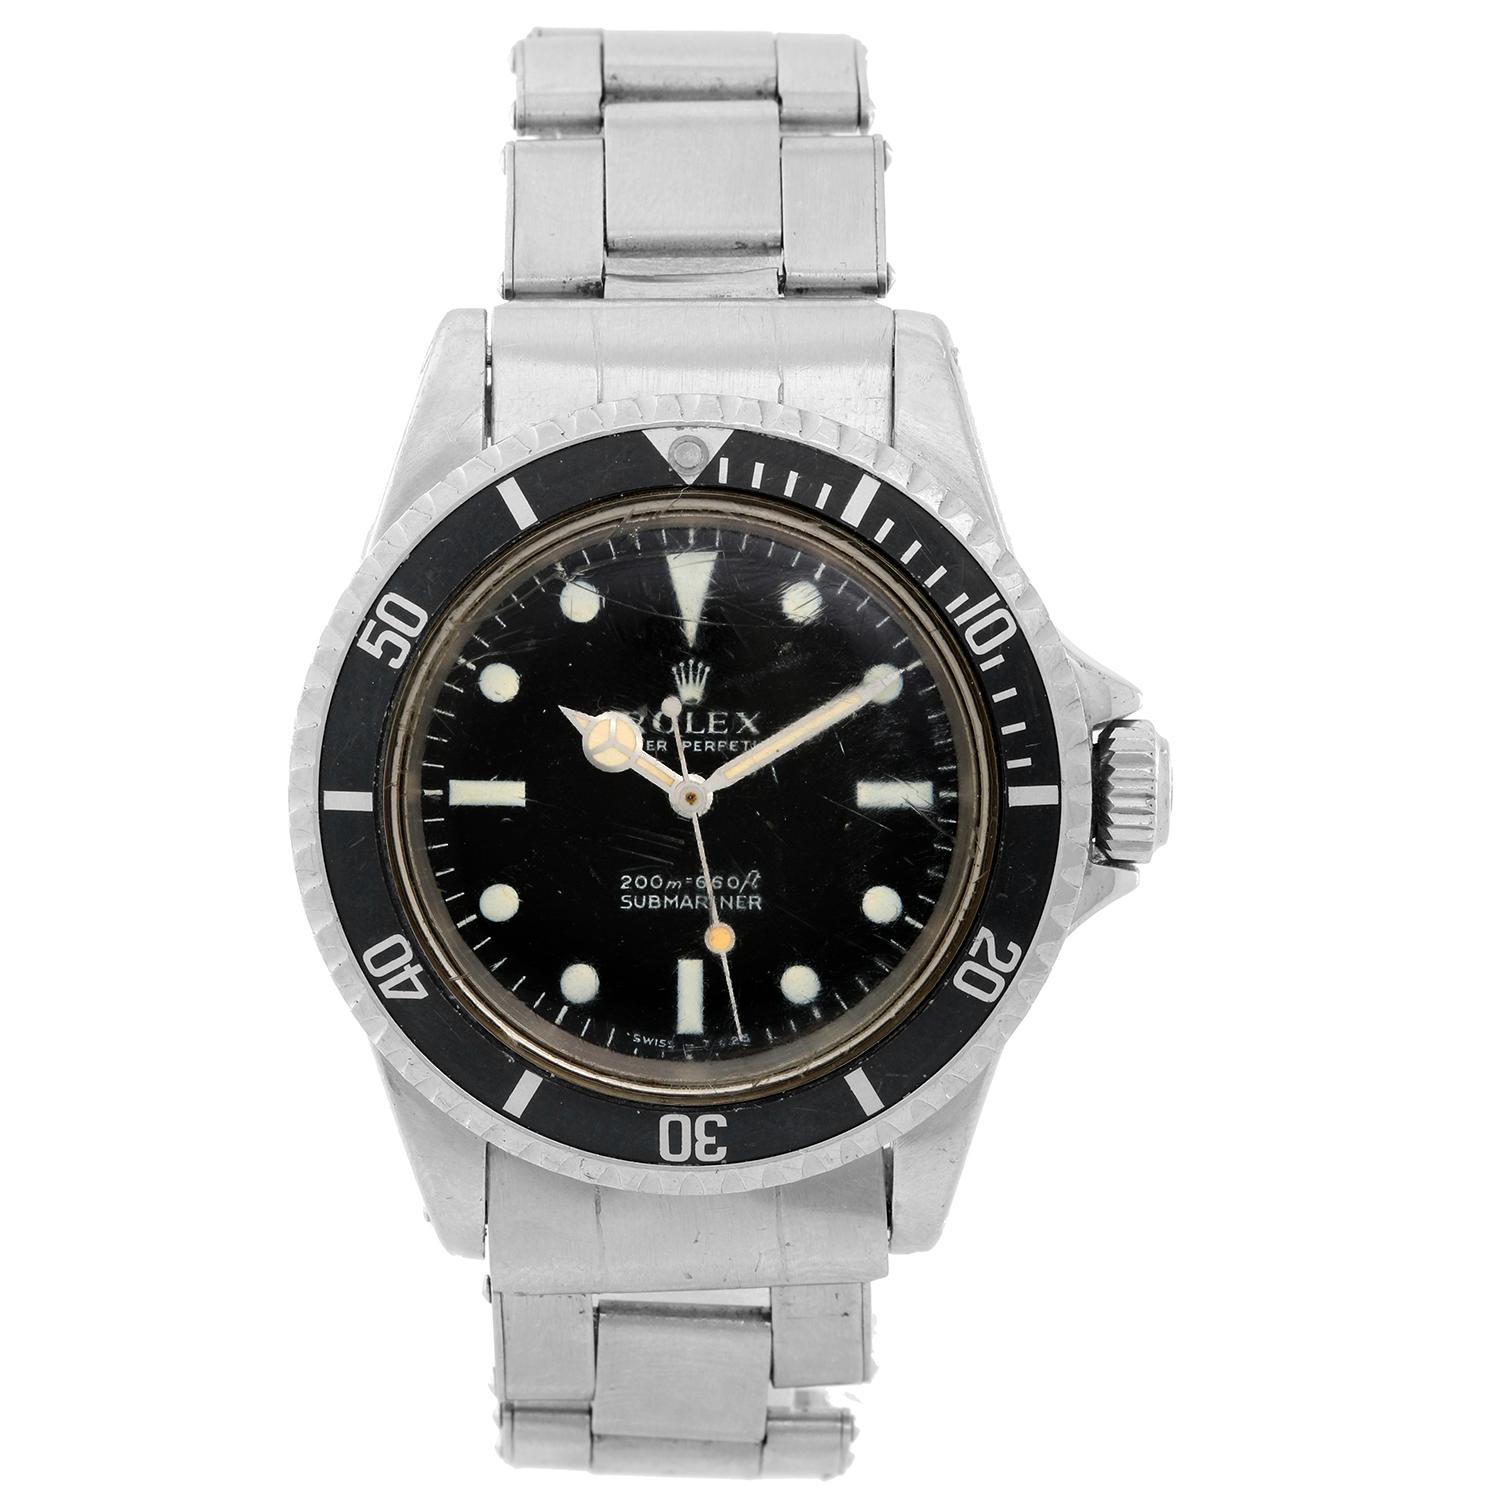 Rolex Stainless Steel Submariner Vintage Automatic Wristwatch Ref 5513